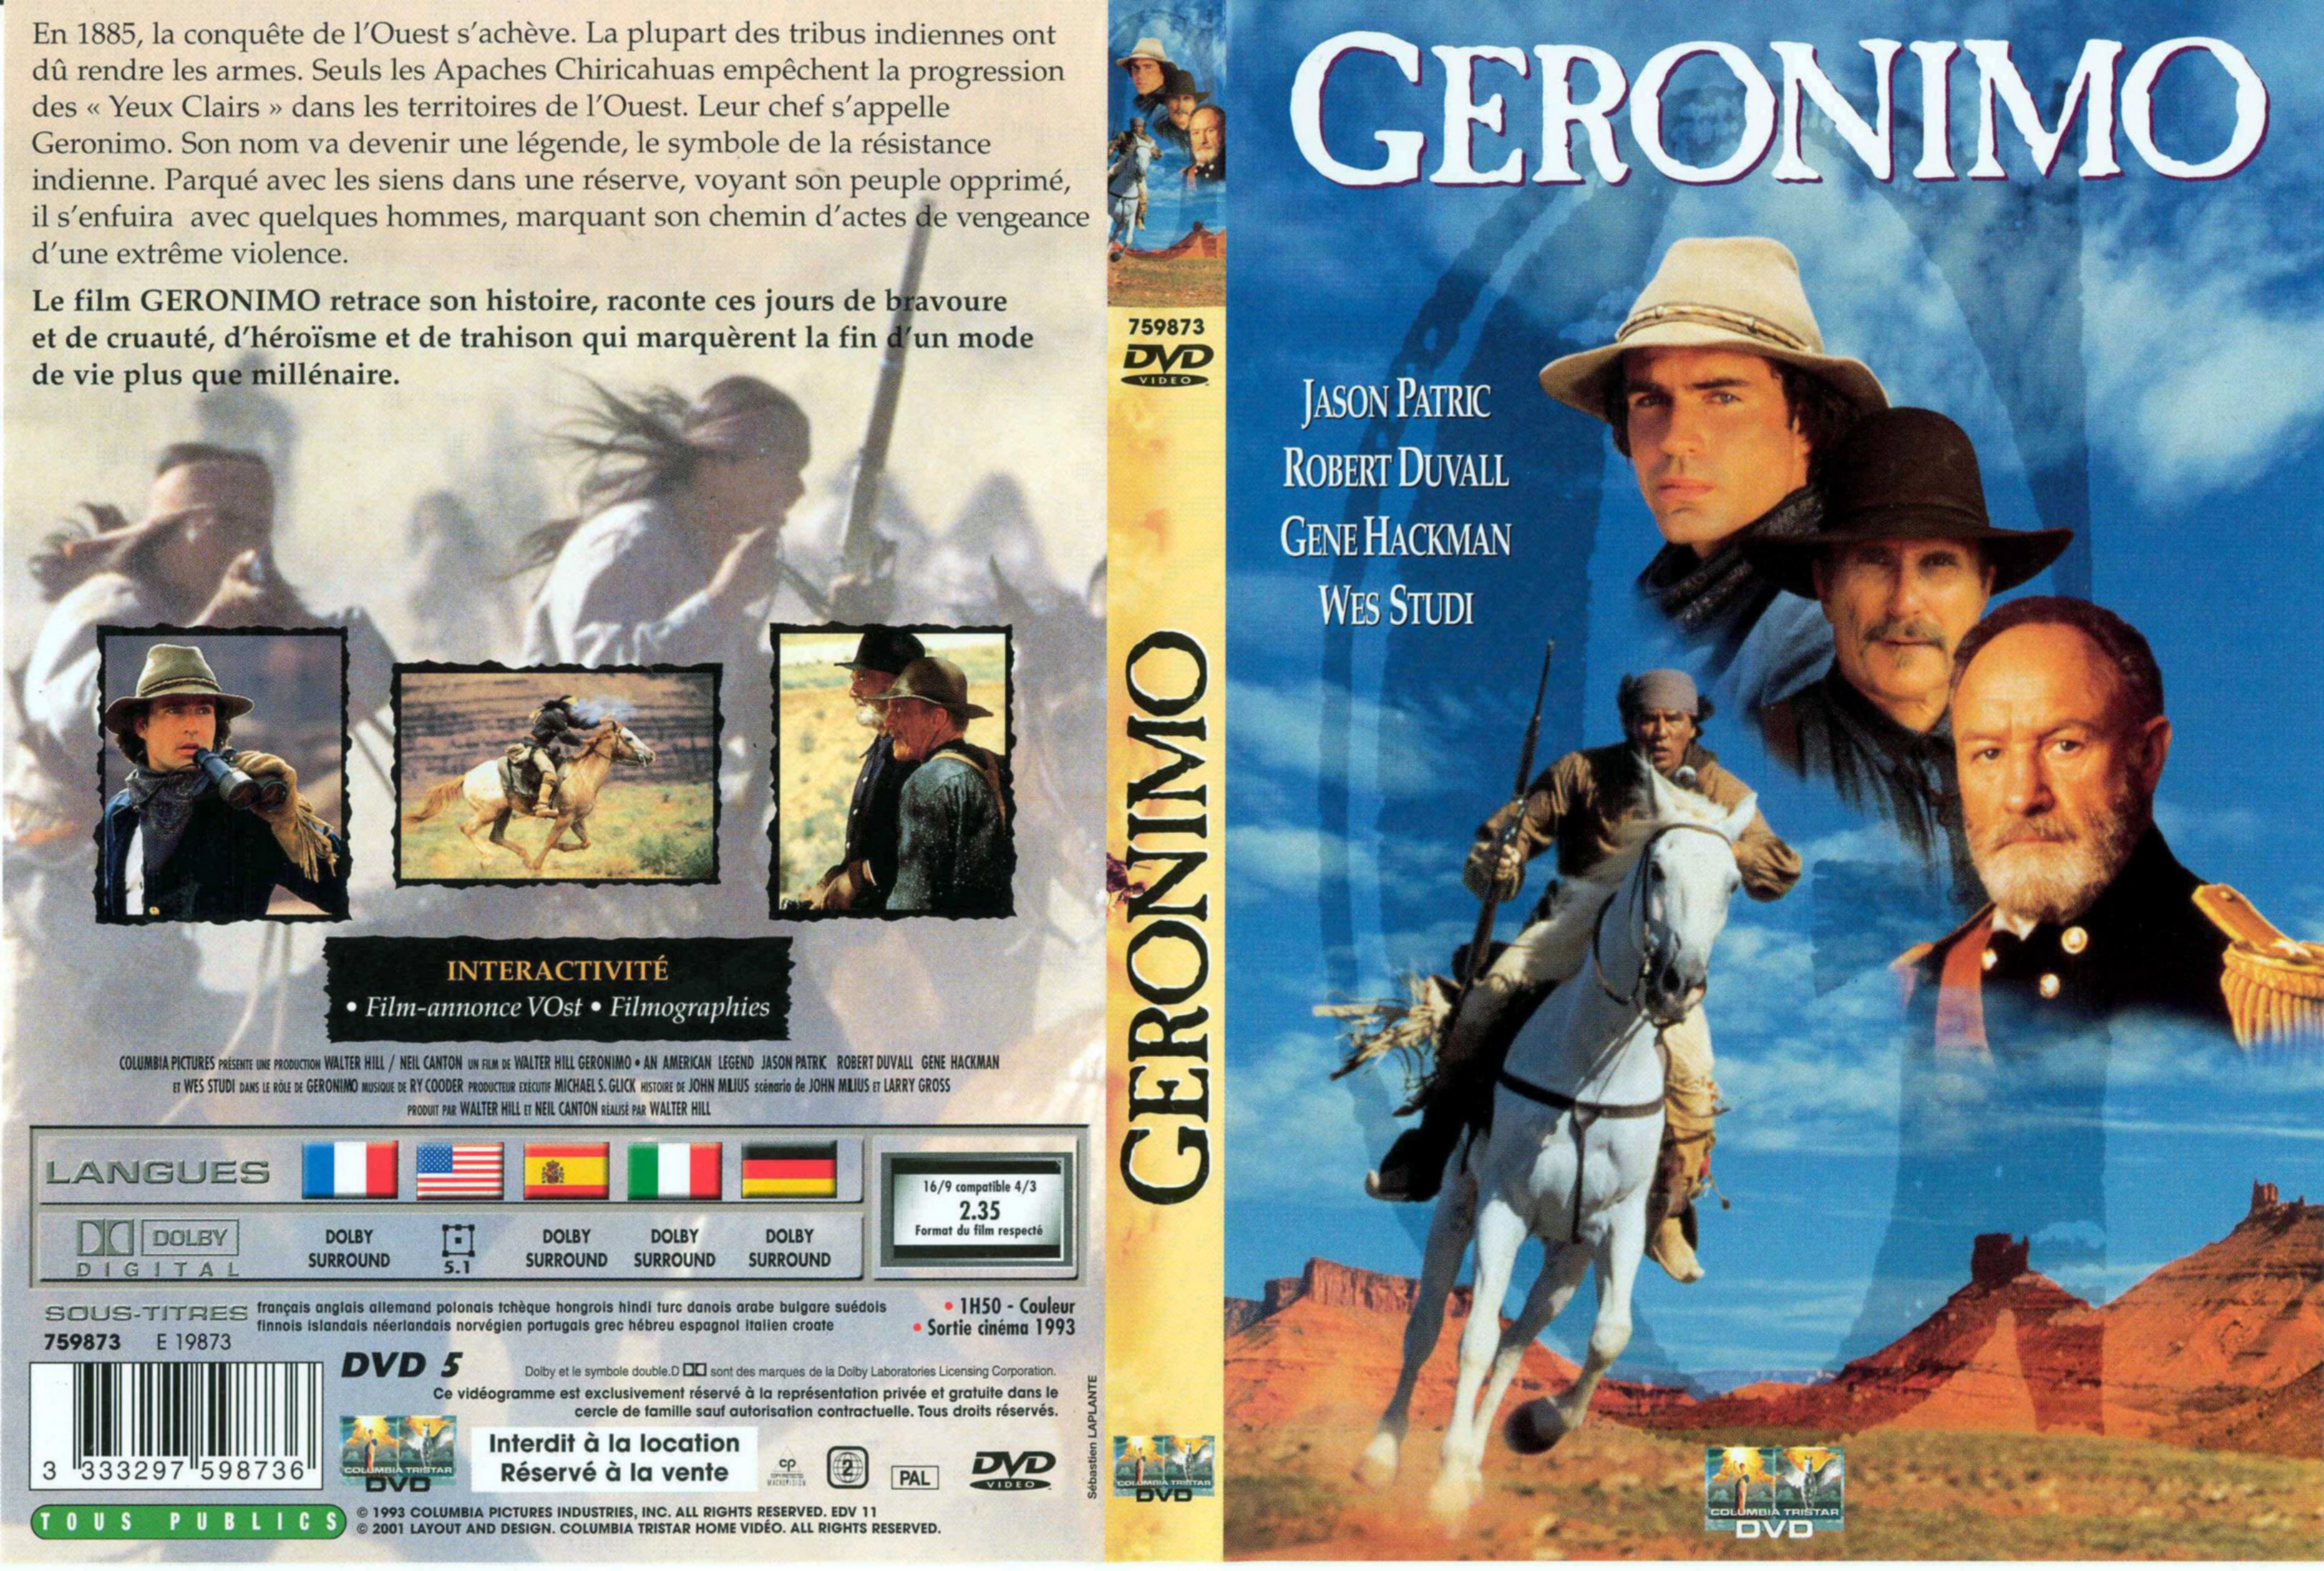 Jaquette DVD Geronimo v2